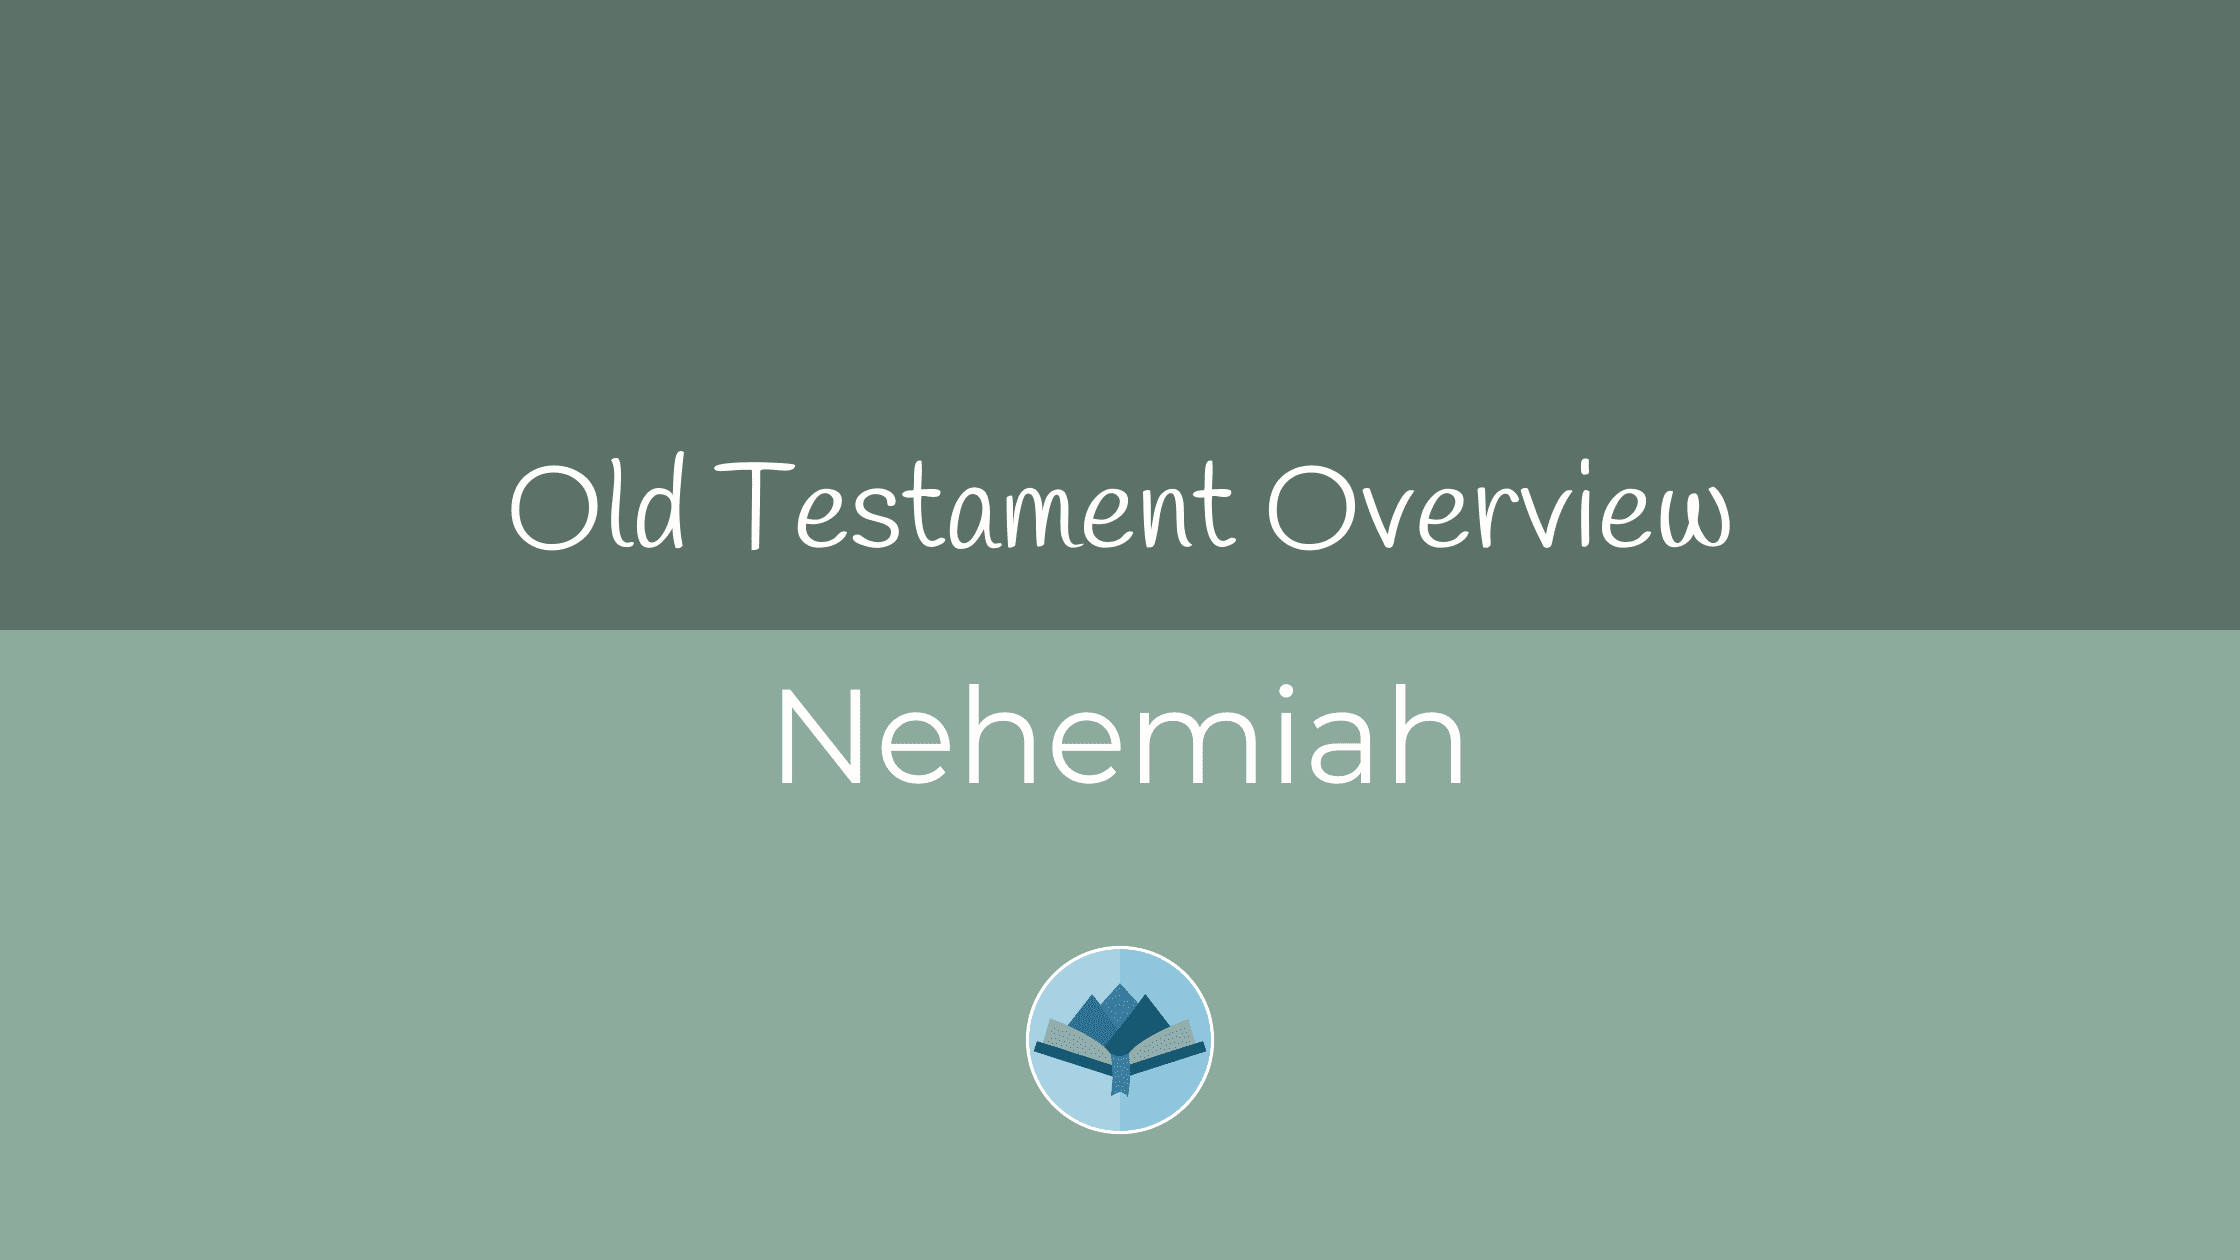 Nehemiah Overview